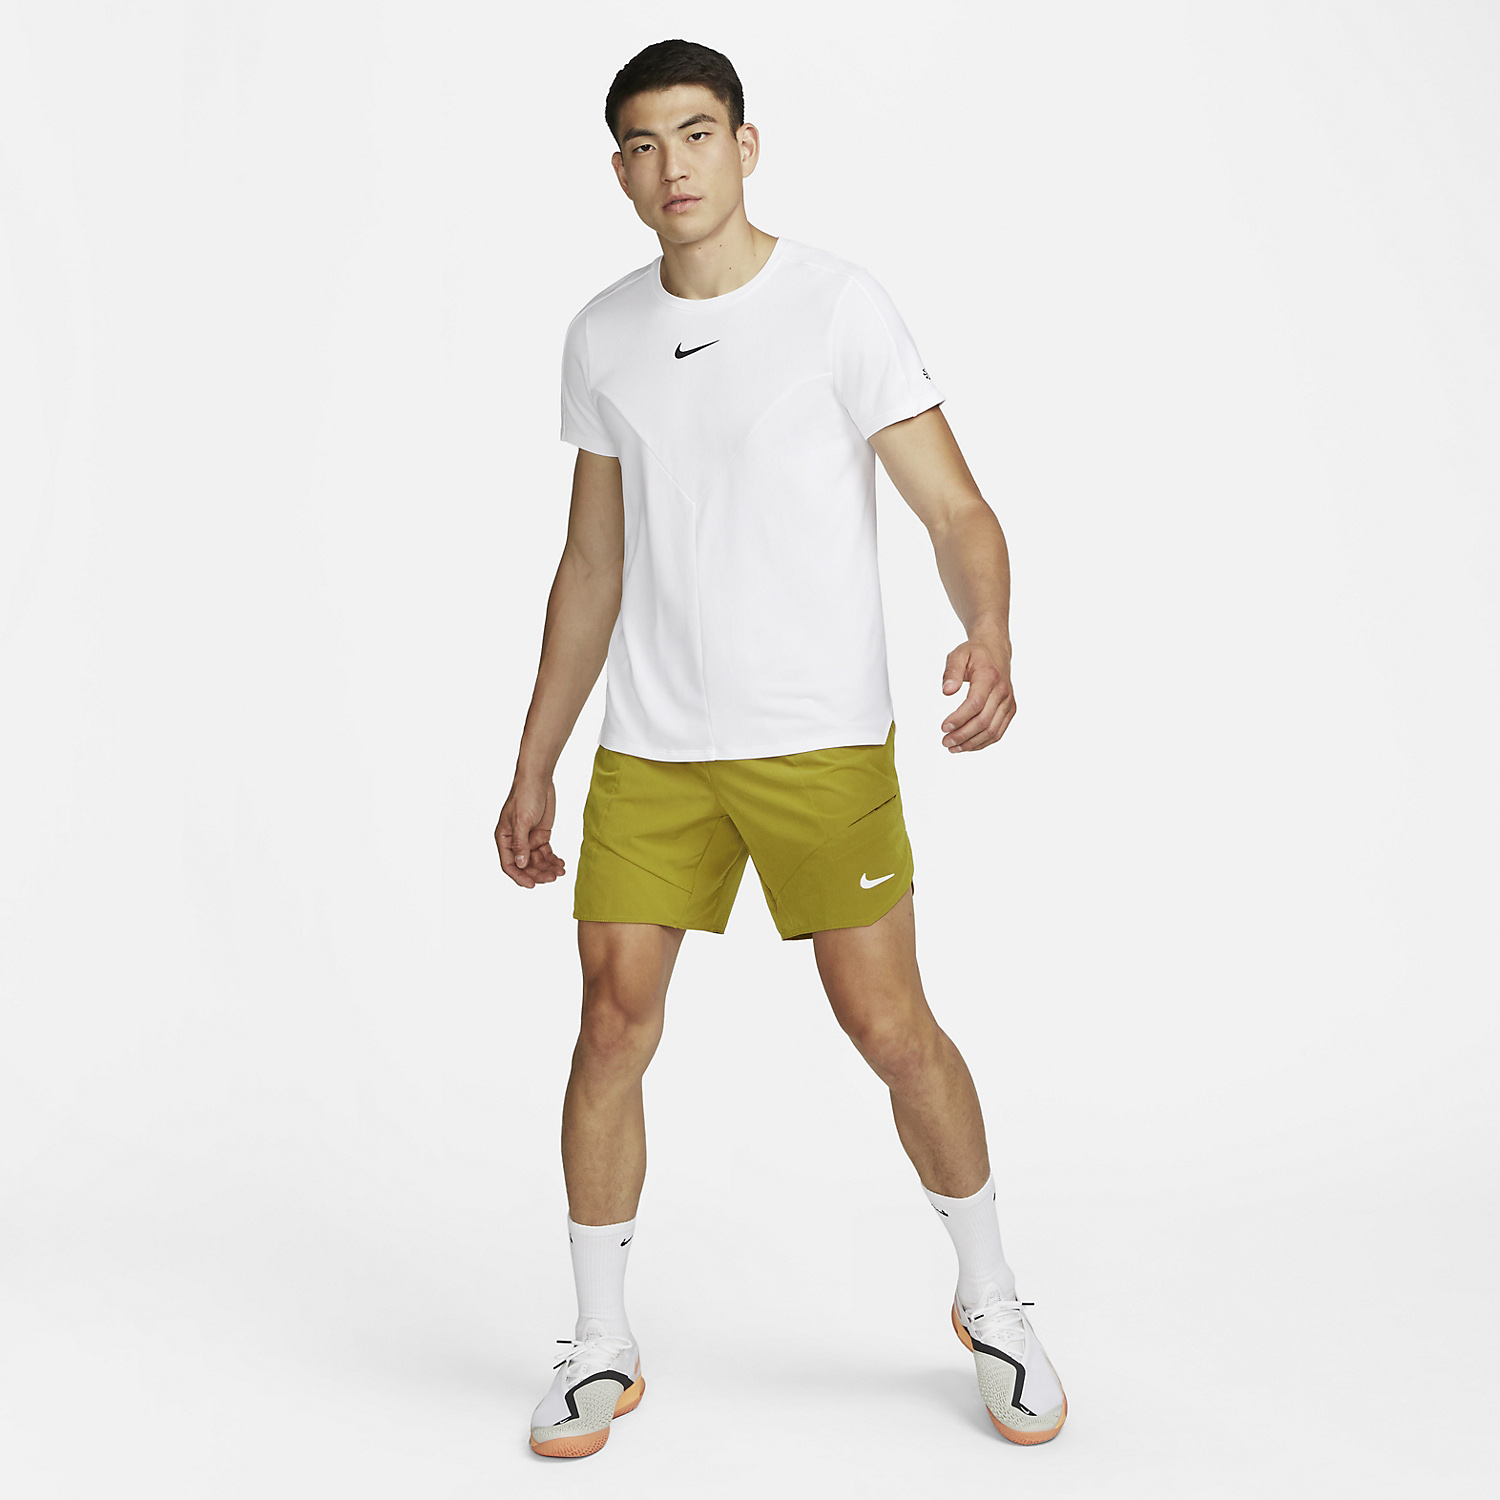 Nike Dri-FIT Advantage 7in Men's Tennis Shorts - Bronzine